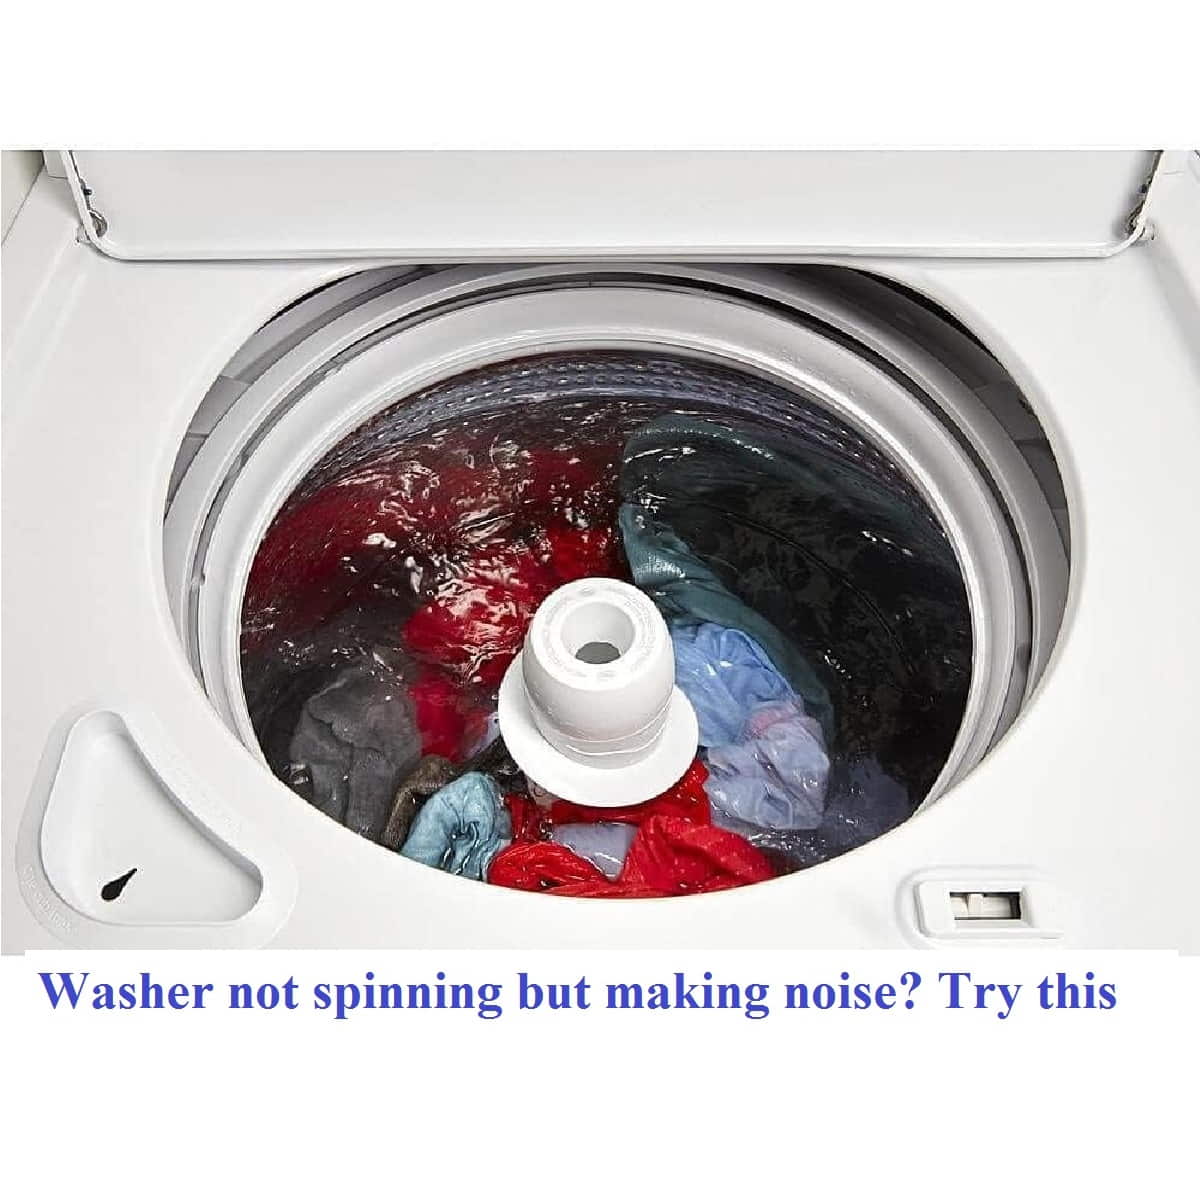 Washing machine not spinning but making noise